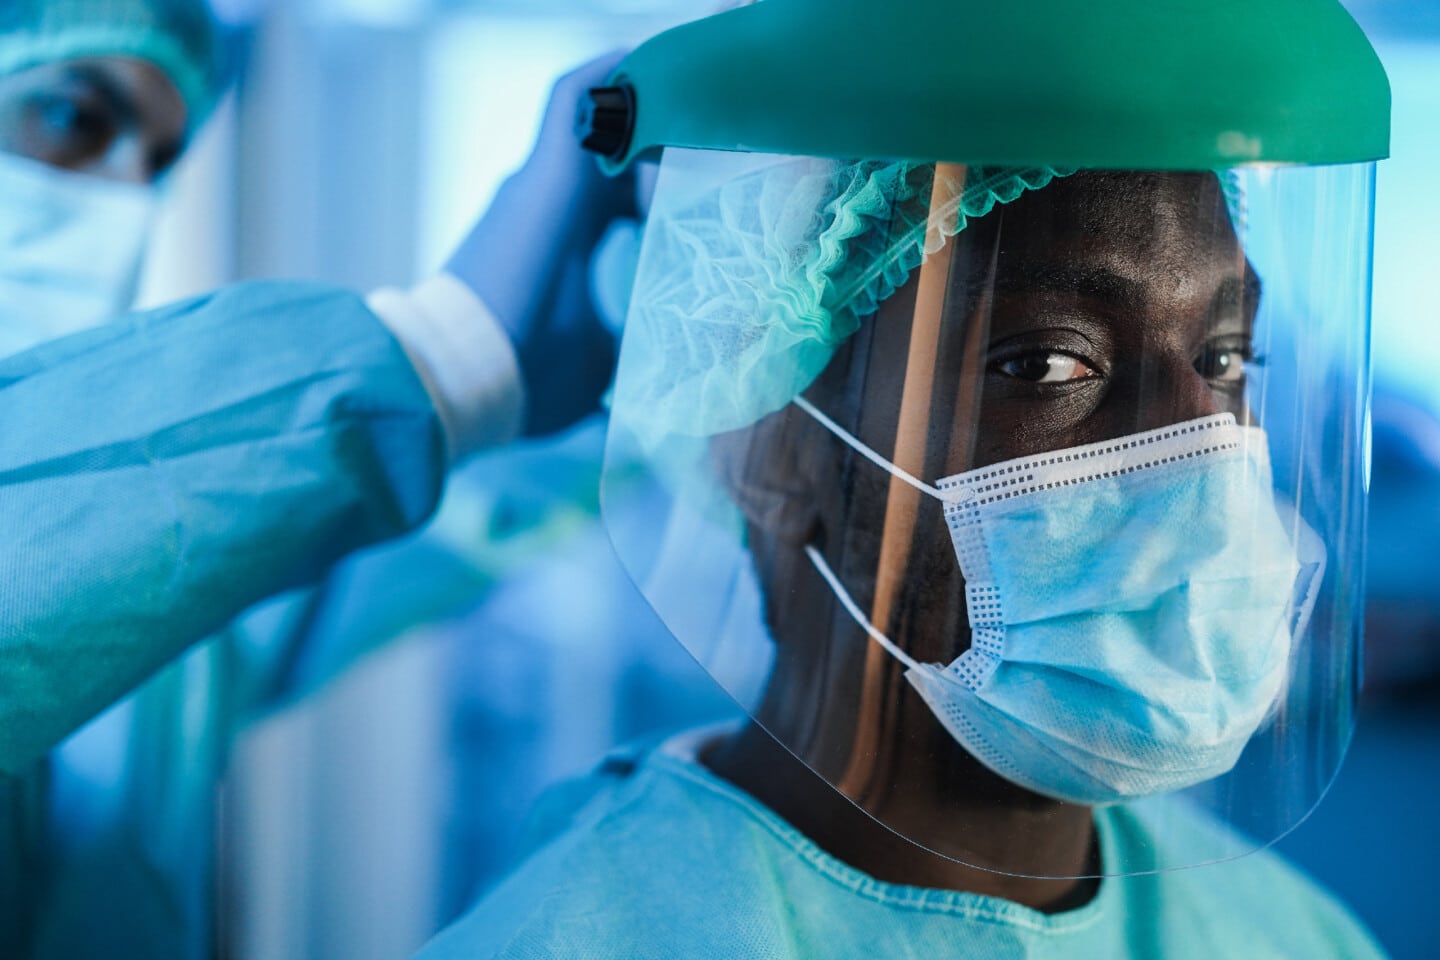 Men doctors at work inside hospital during coronavirus outbreak - Medical worker on Covid-19 crisis wearing face protective mask - Focus on black guy eye